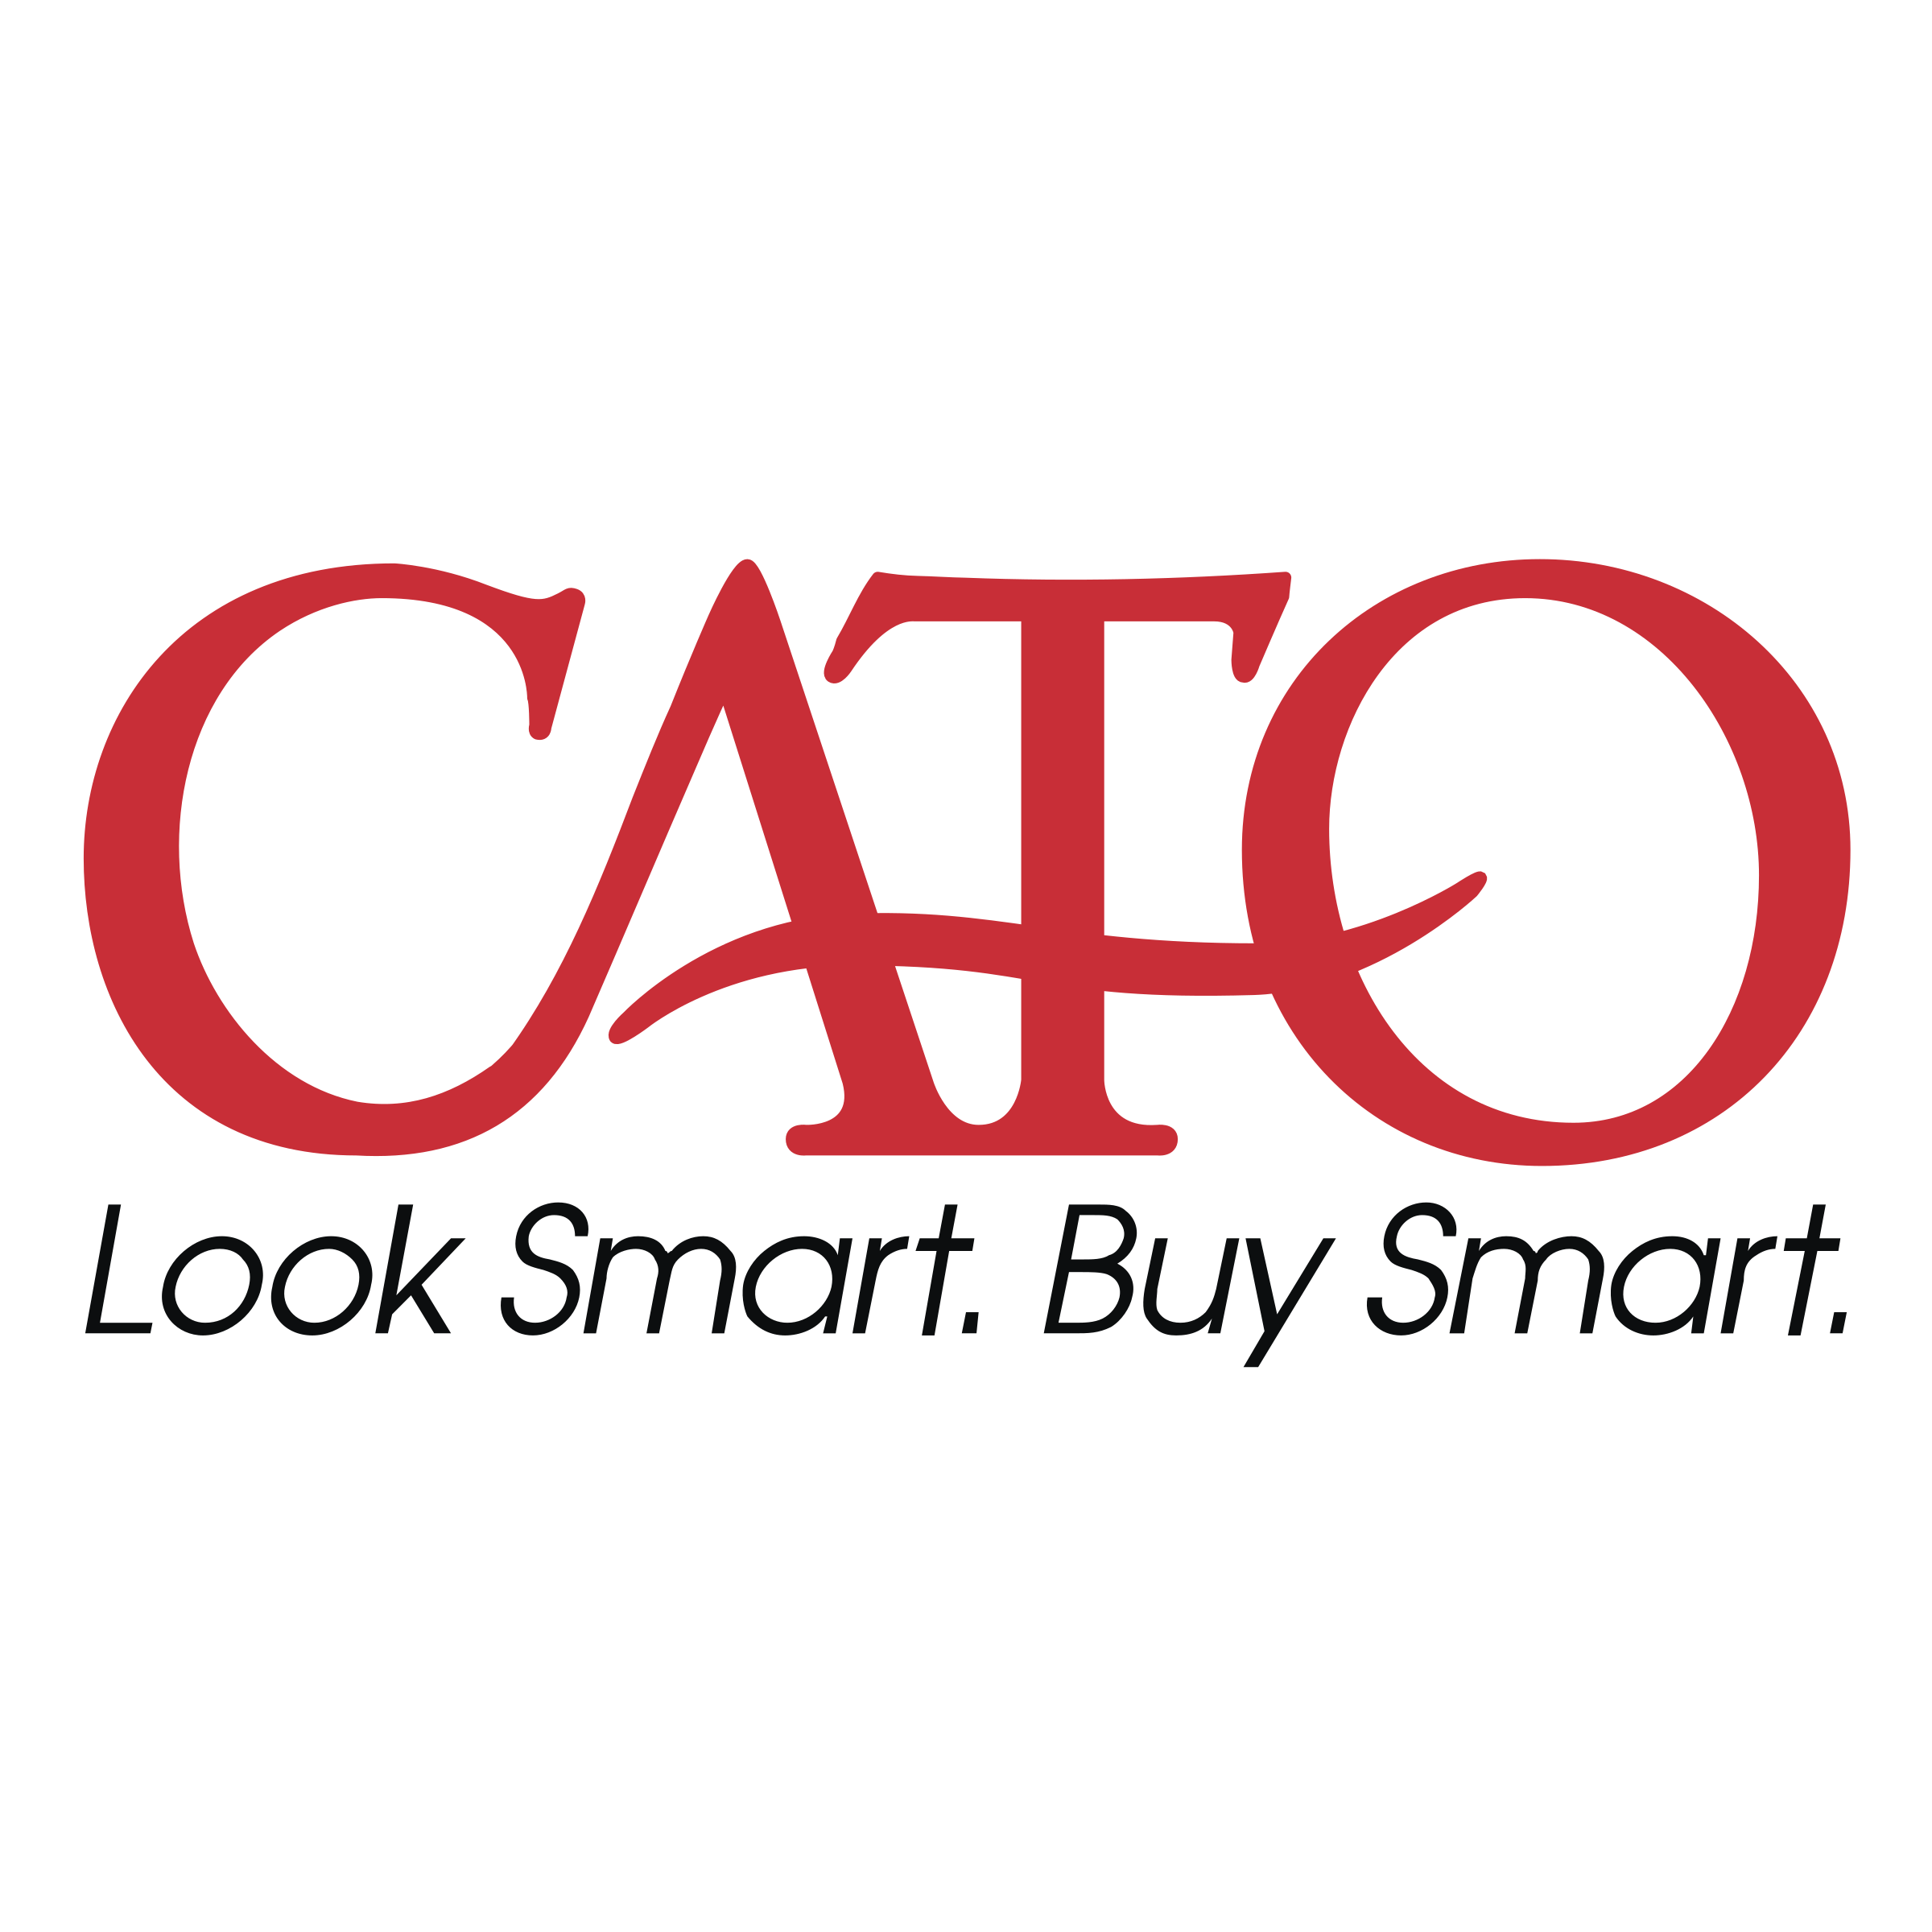 Cato Logo - Cato Logo PNG Transparent & SVG Vector - Freebie Supply